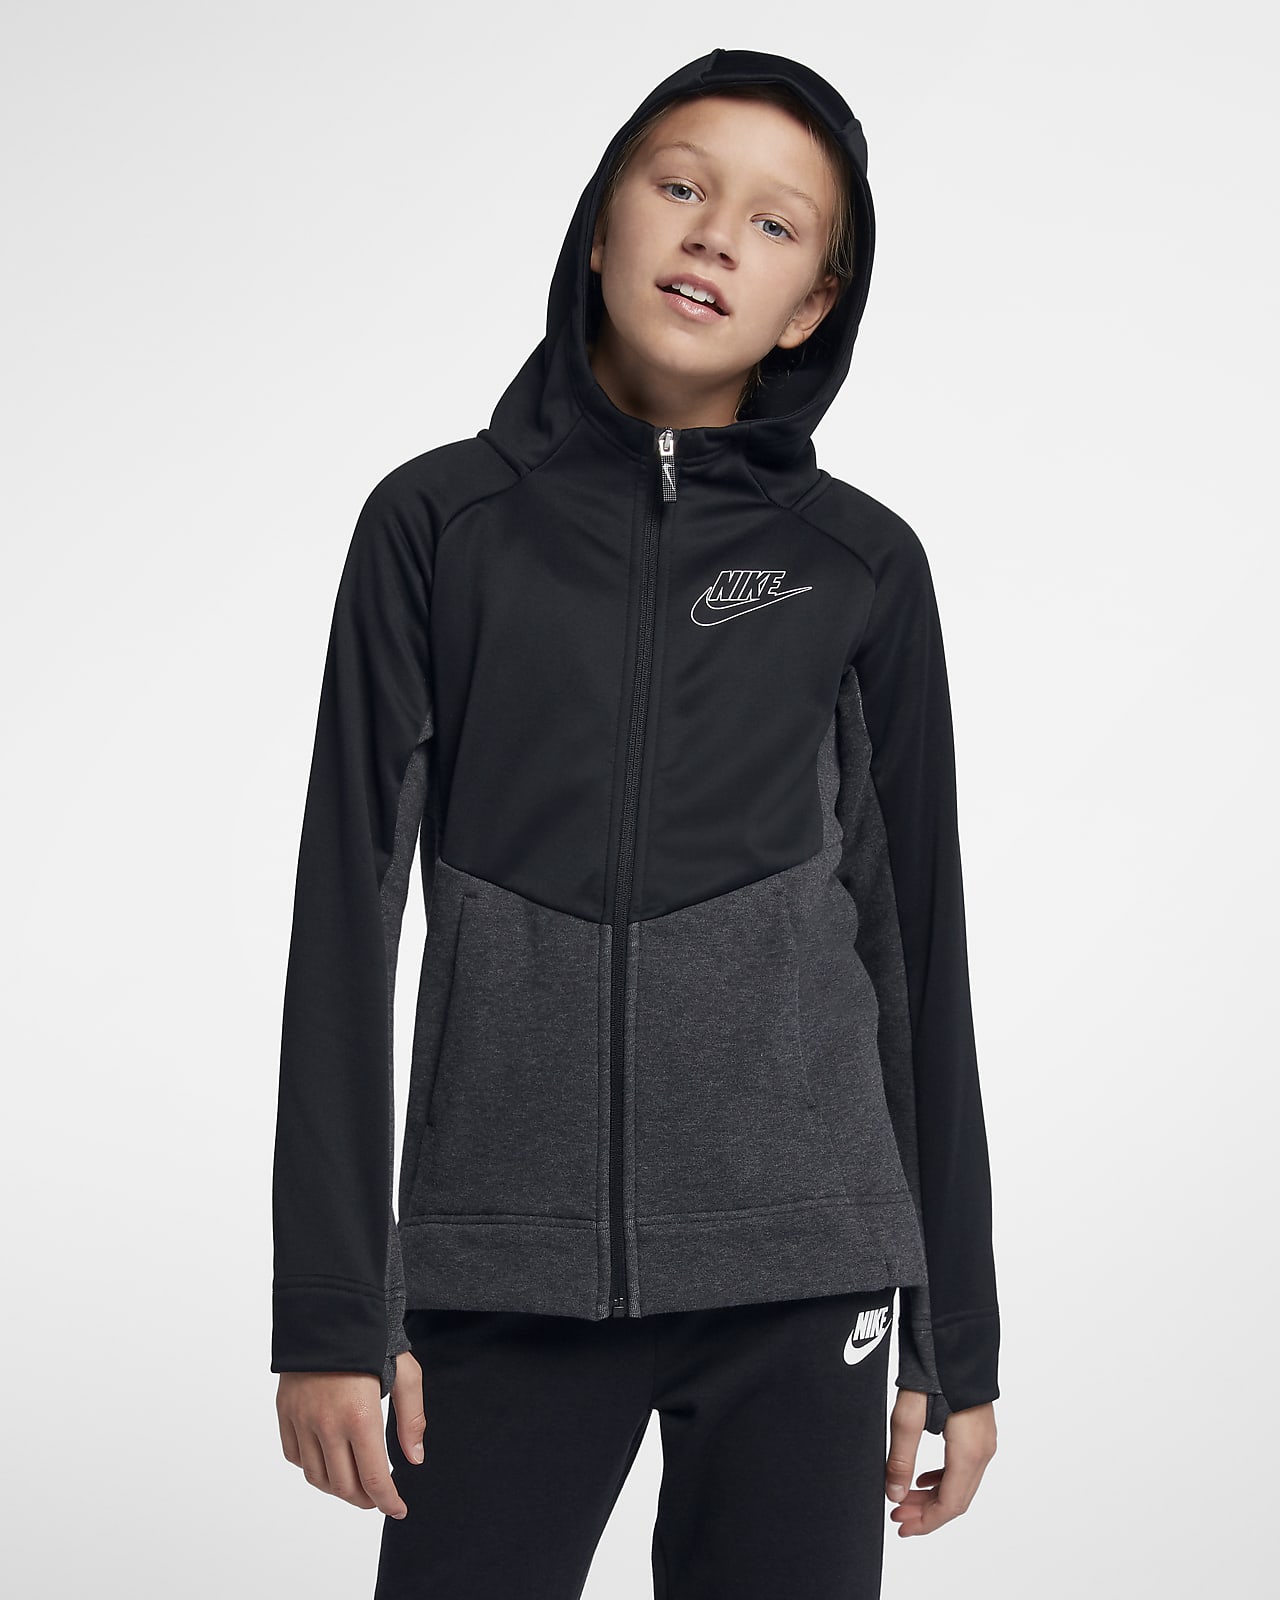 Gedetailleerd Moreel onderwijs Koningin Nike Sportswear My Nike Hoodie für ältere Kinder (Mädchen). Nike CH